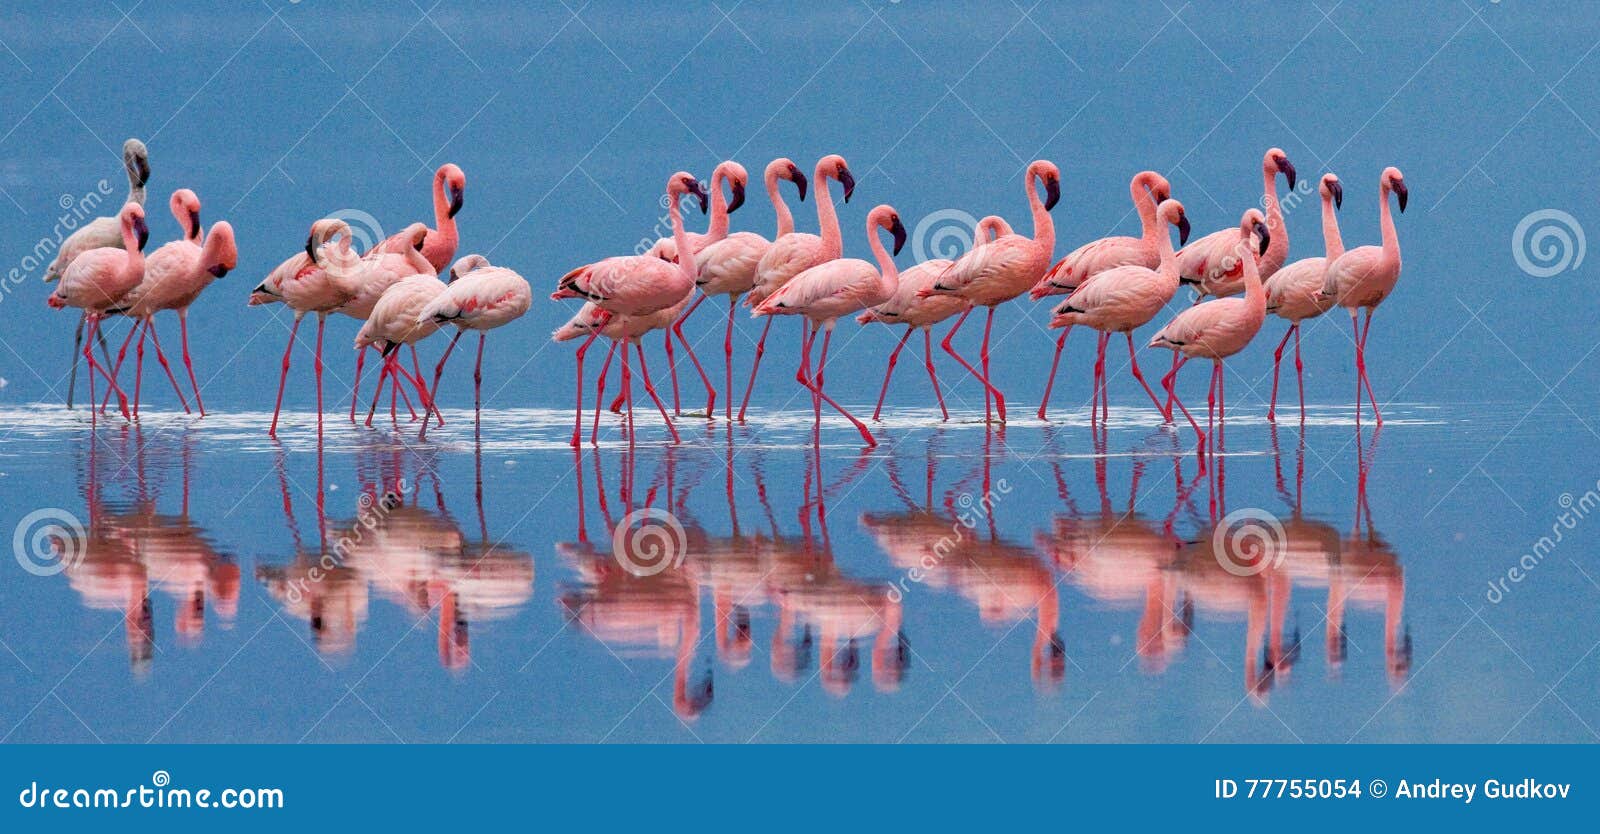 flamingos on the lake with reflection. kenya. africa. nakuru national park. lake bogoria national reserve.